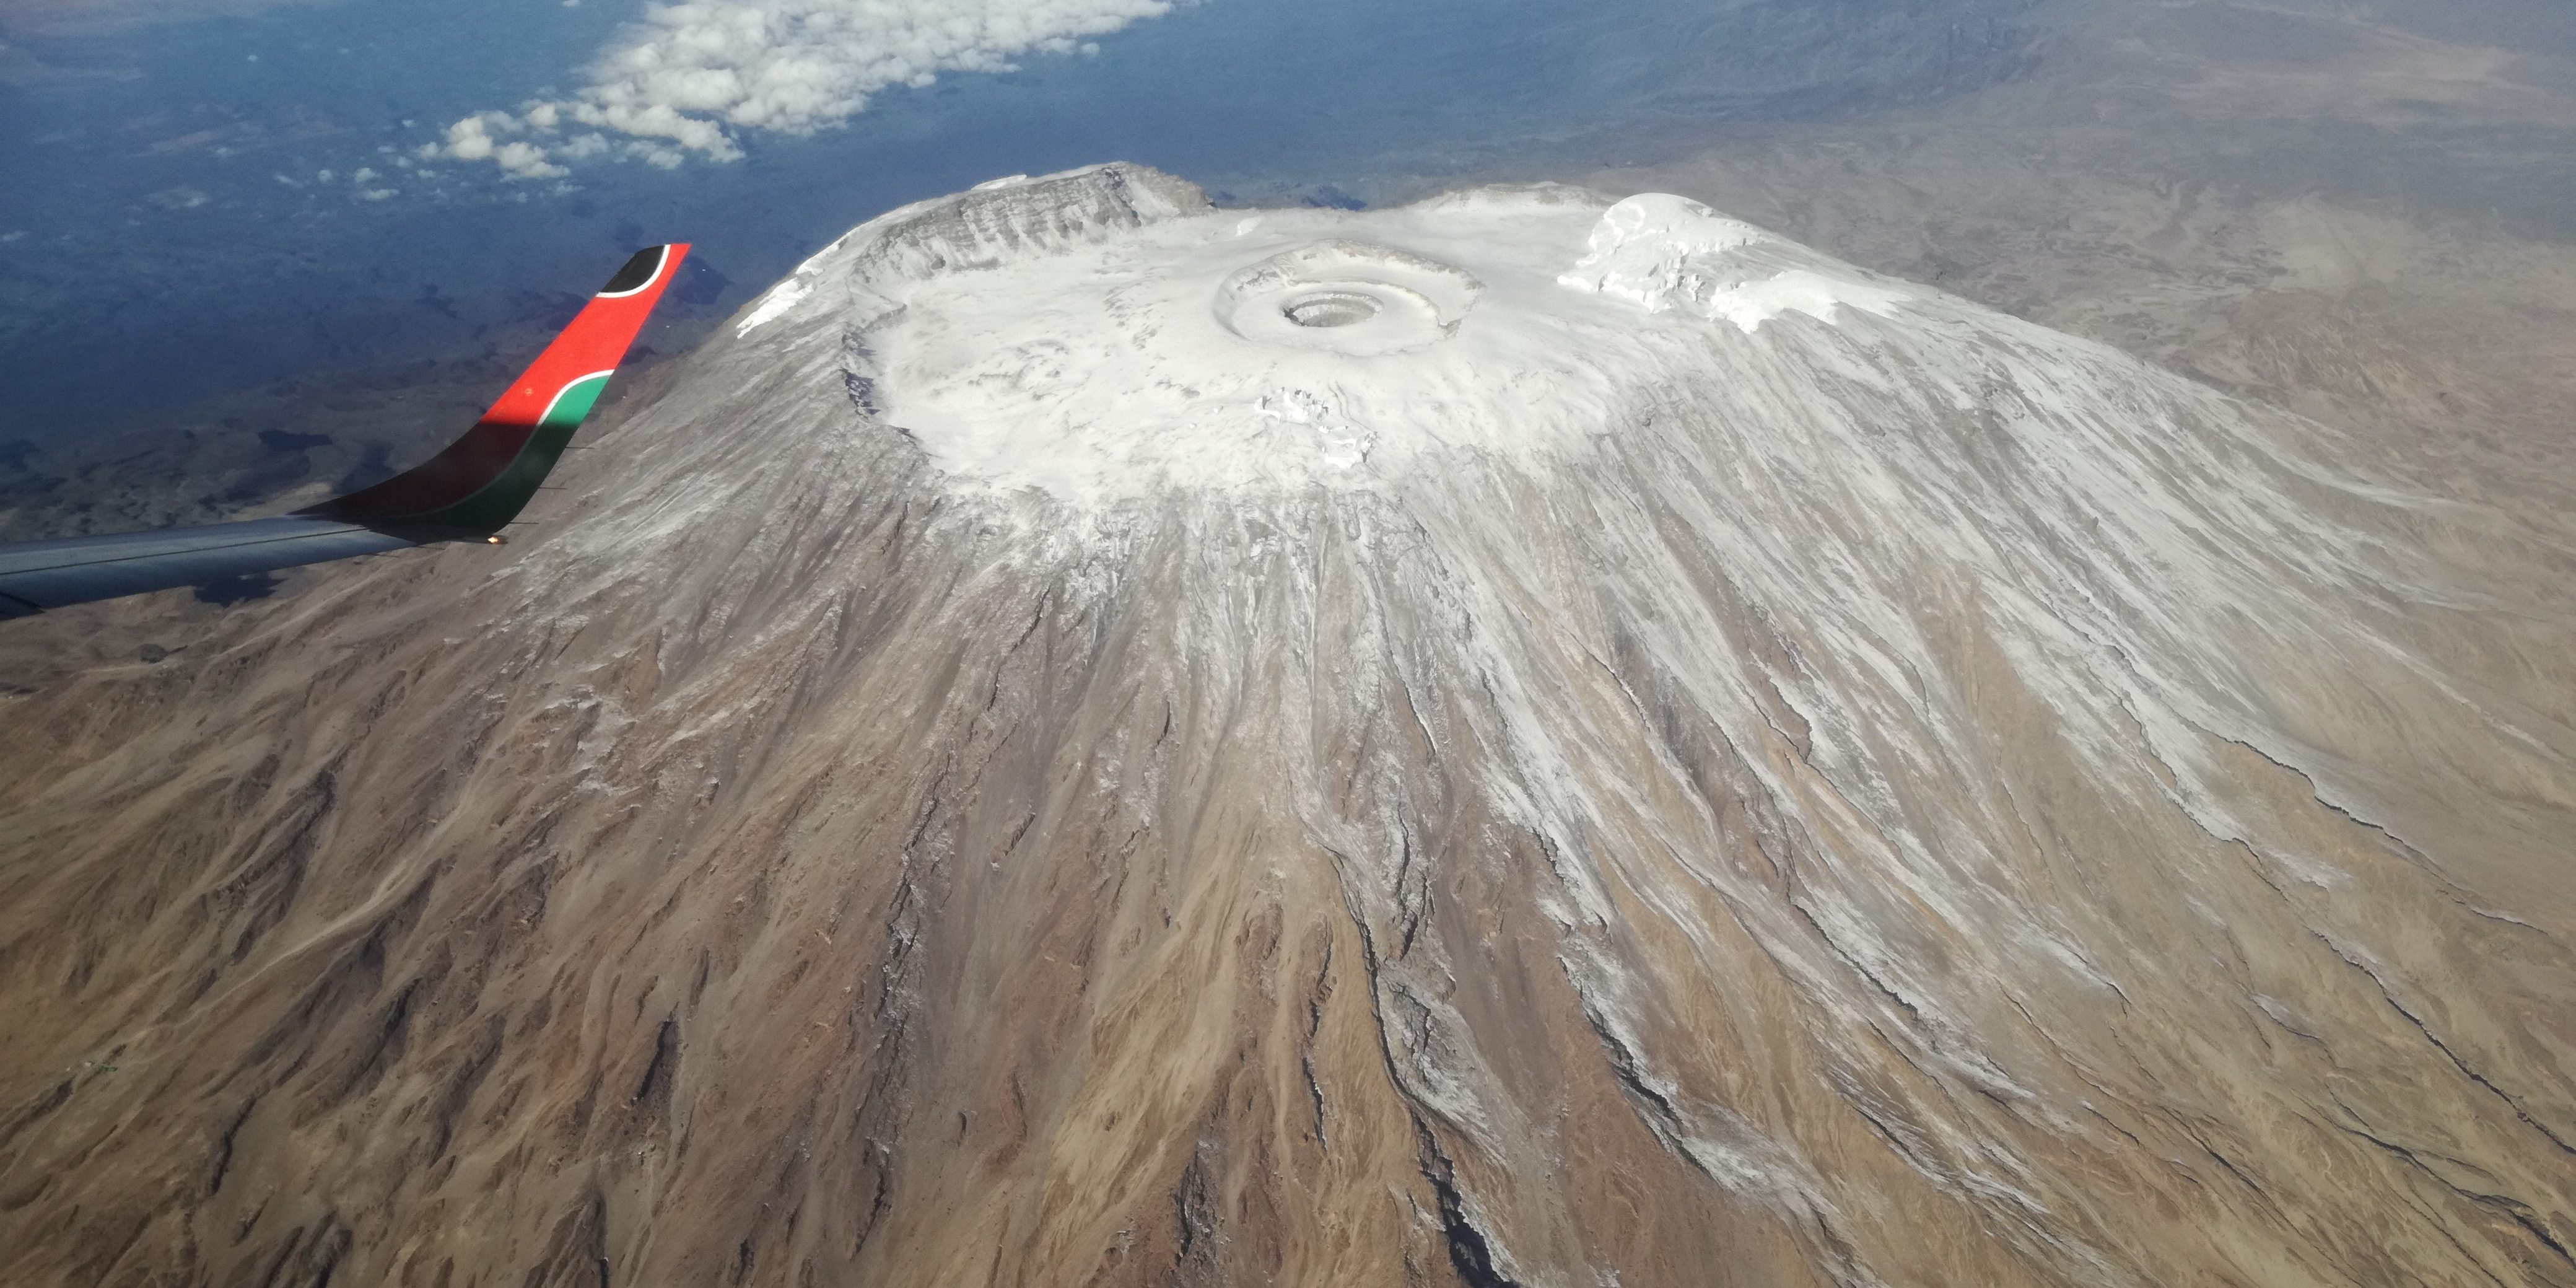 Kilimanjaro from the Skies